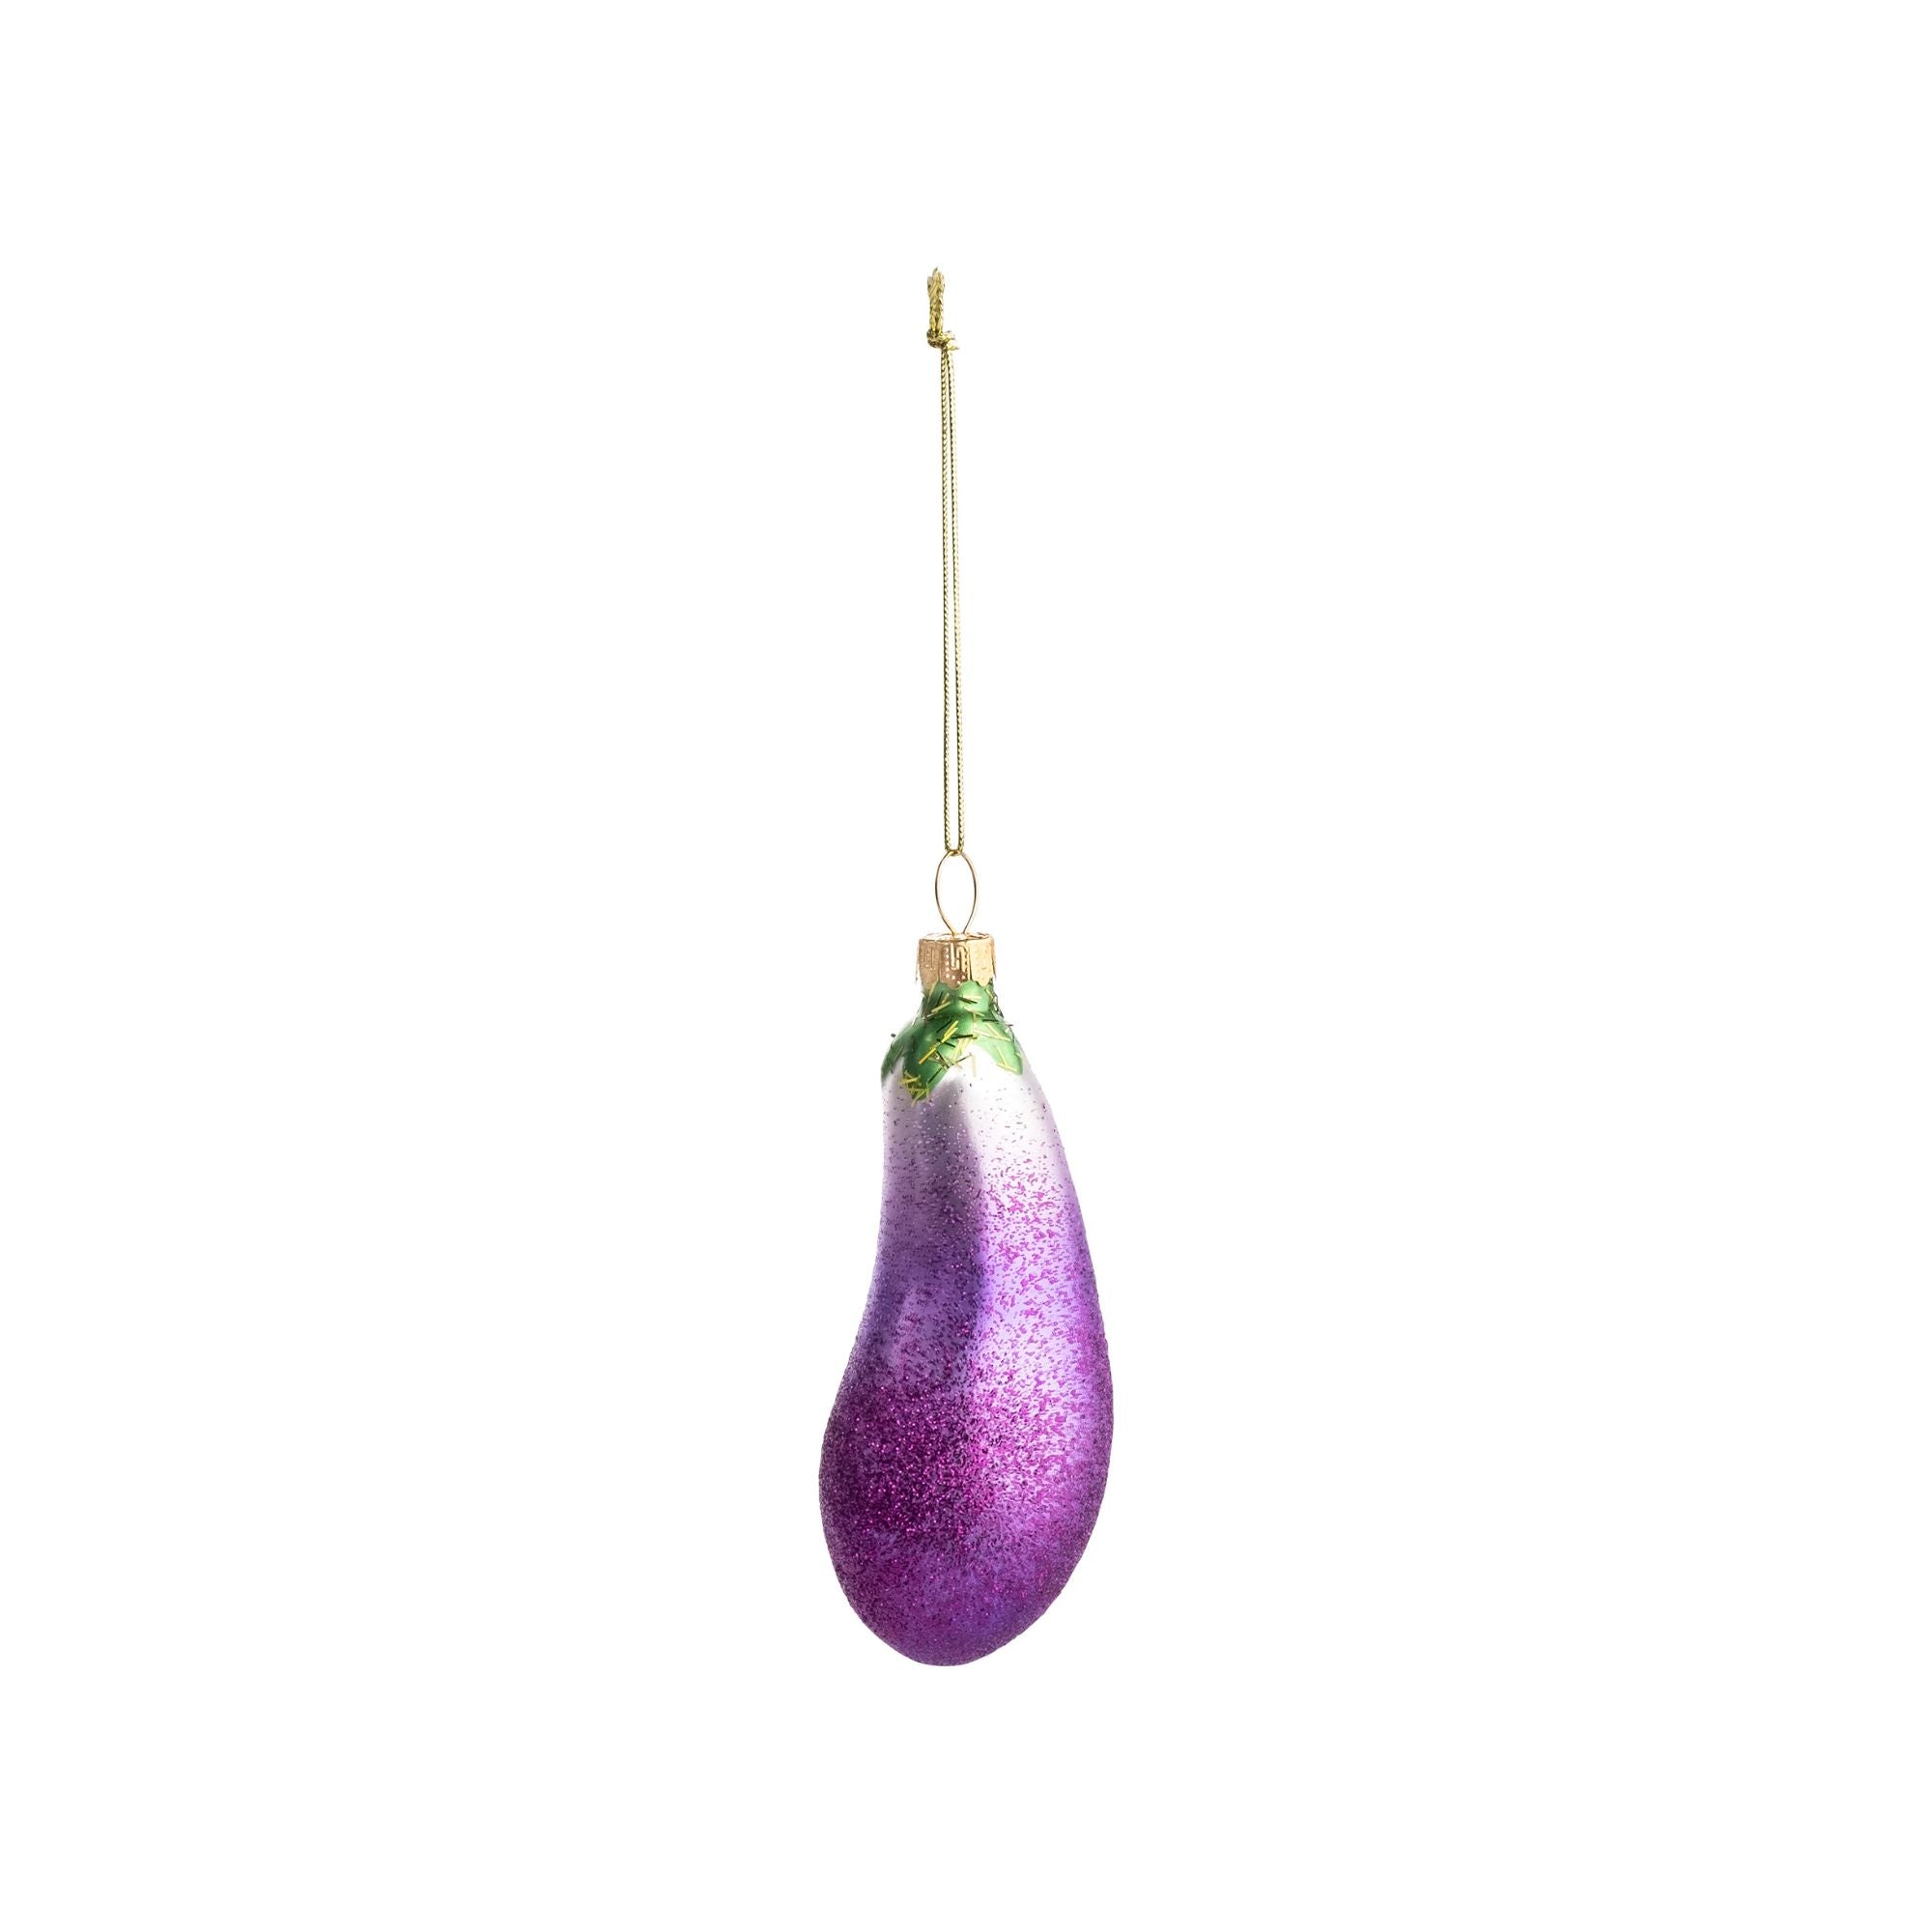 Eggplant Ornament - Set of 2